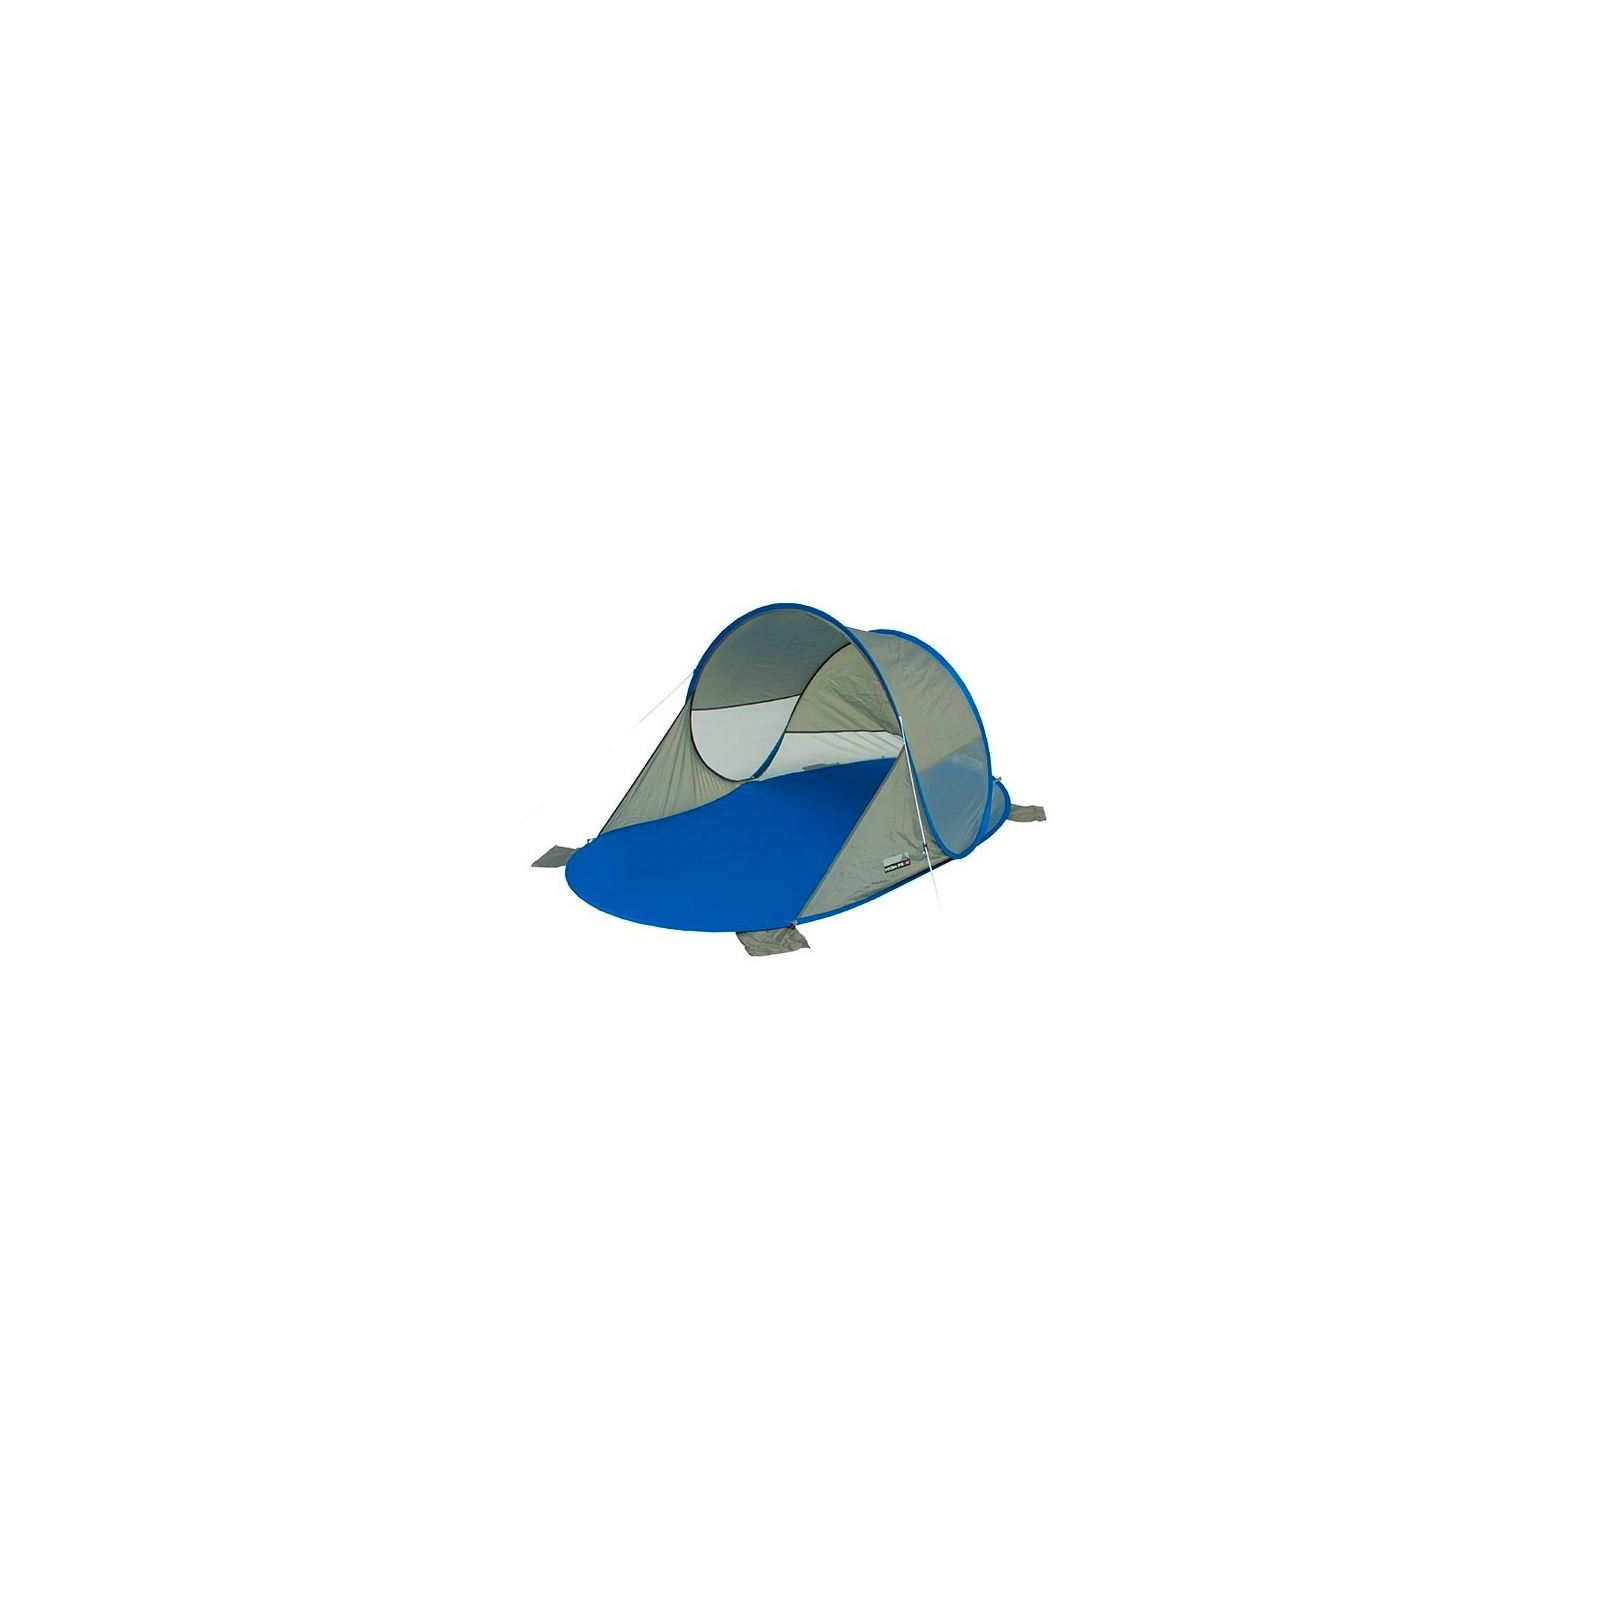 Палатка High Peak Calvia 40 Blue/Grey (926282)